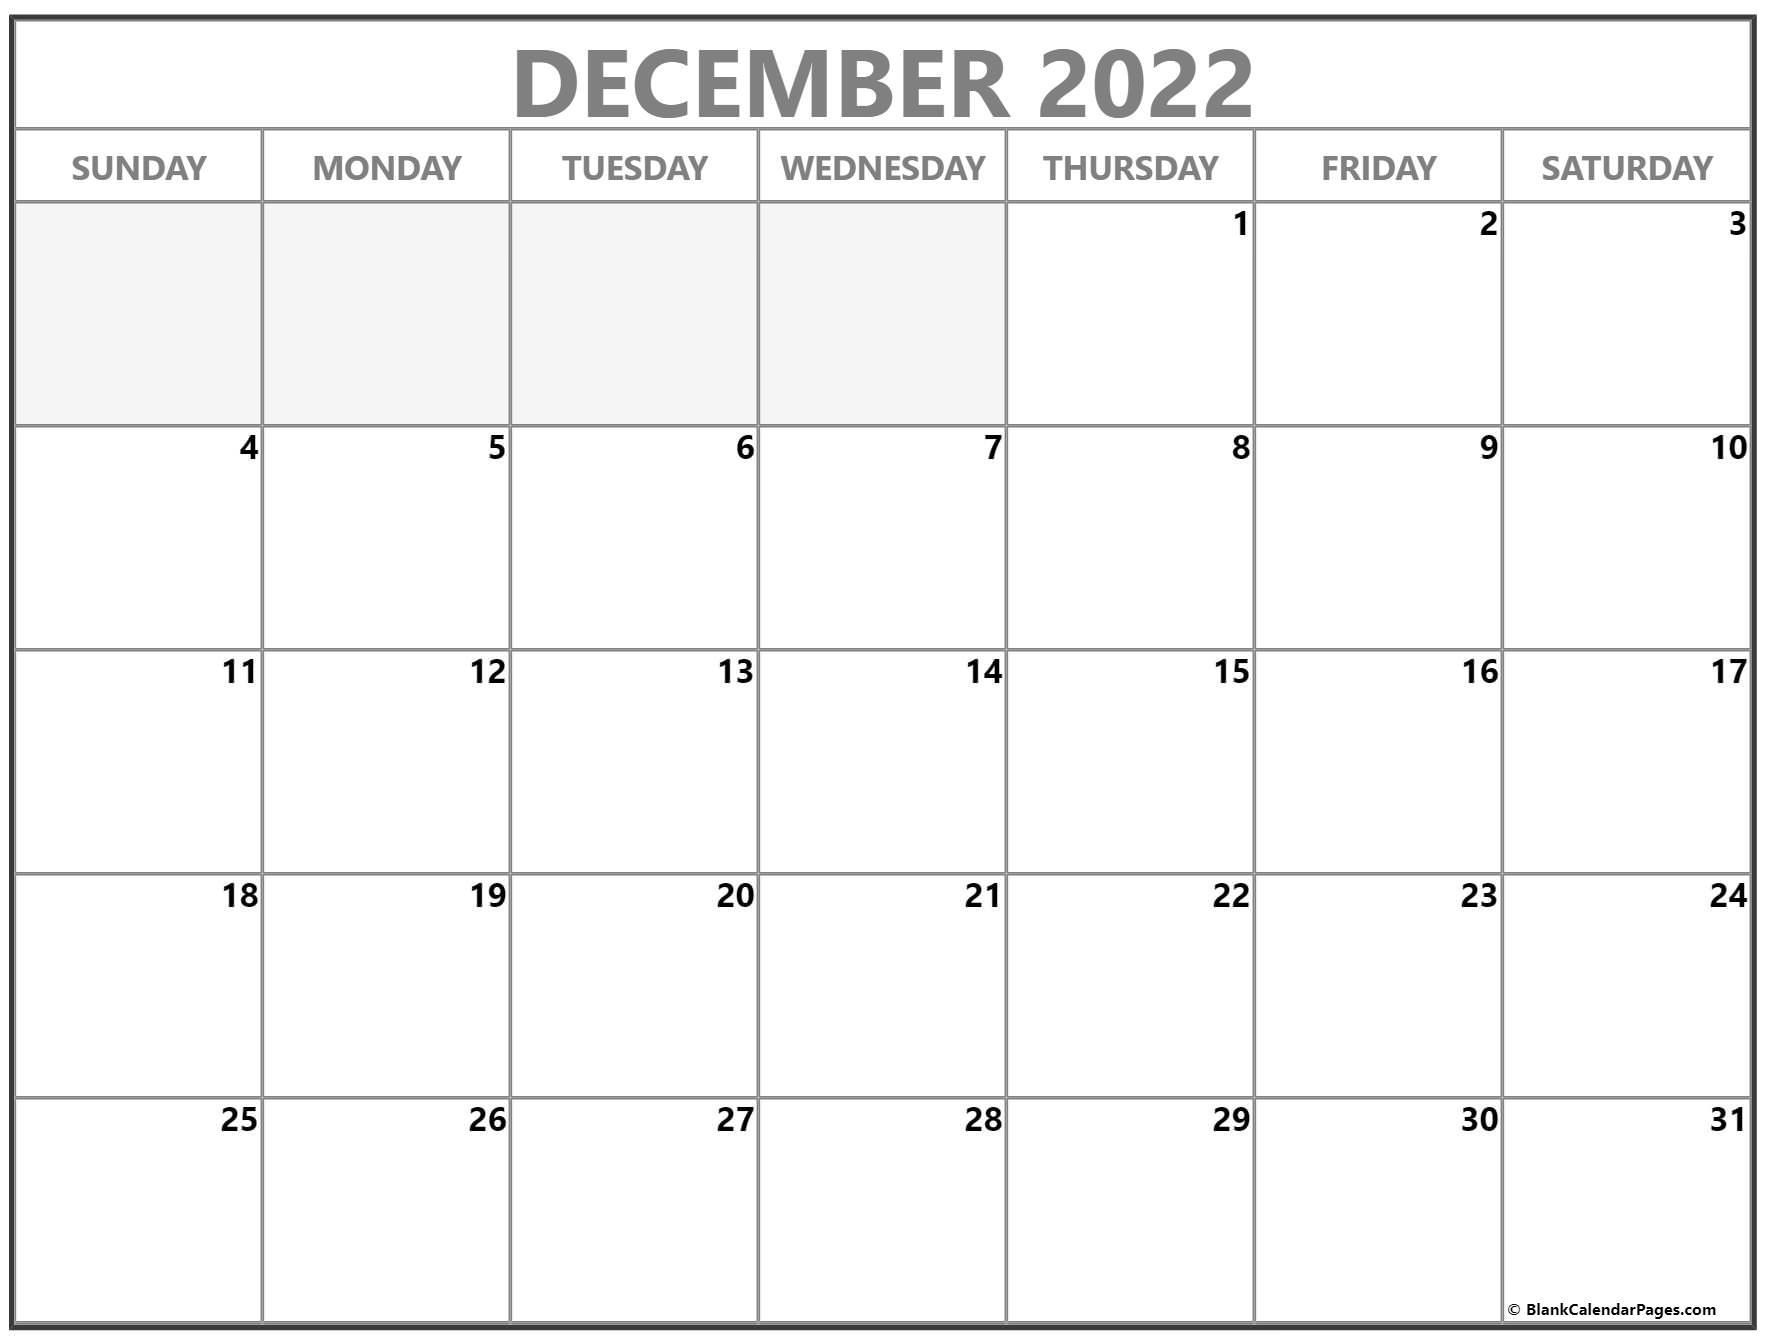 December 2022 Calendar | Free Printable Calendar Templates Calendar December 2022 Printable